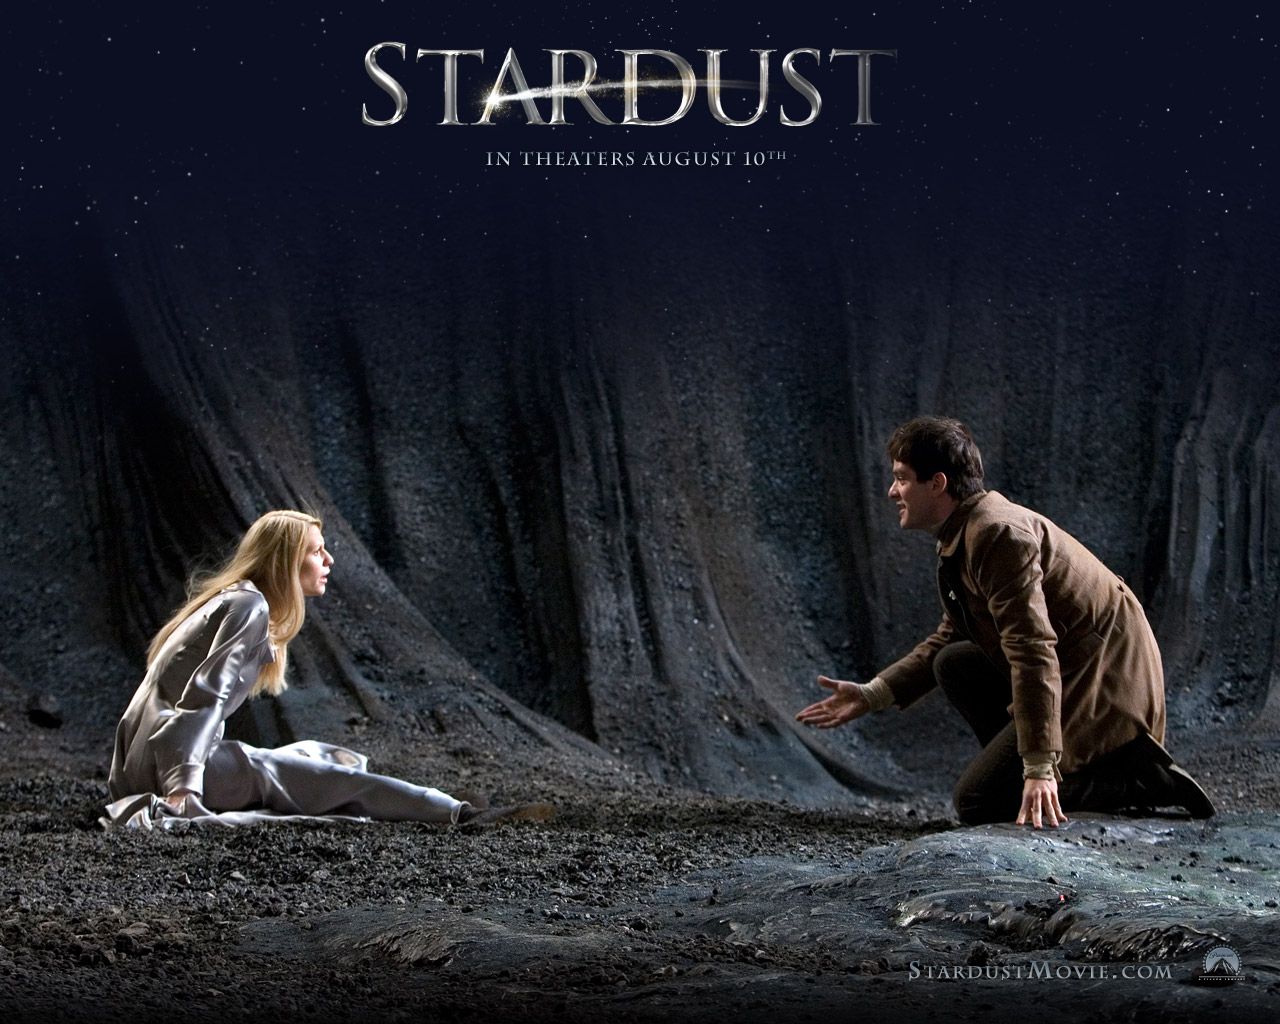 Stardust wallpaper, Movie, HQ Stardust pictureK Wallpaper 2019